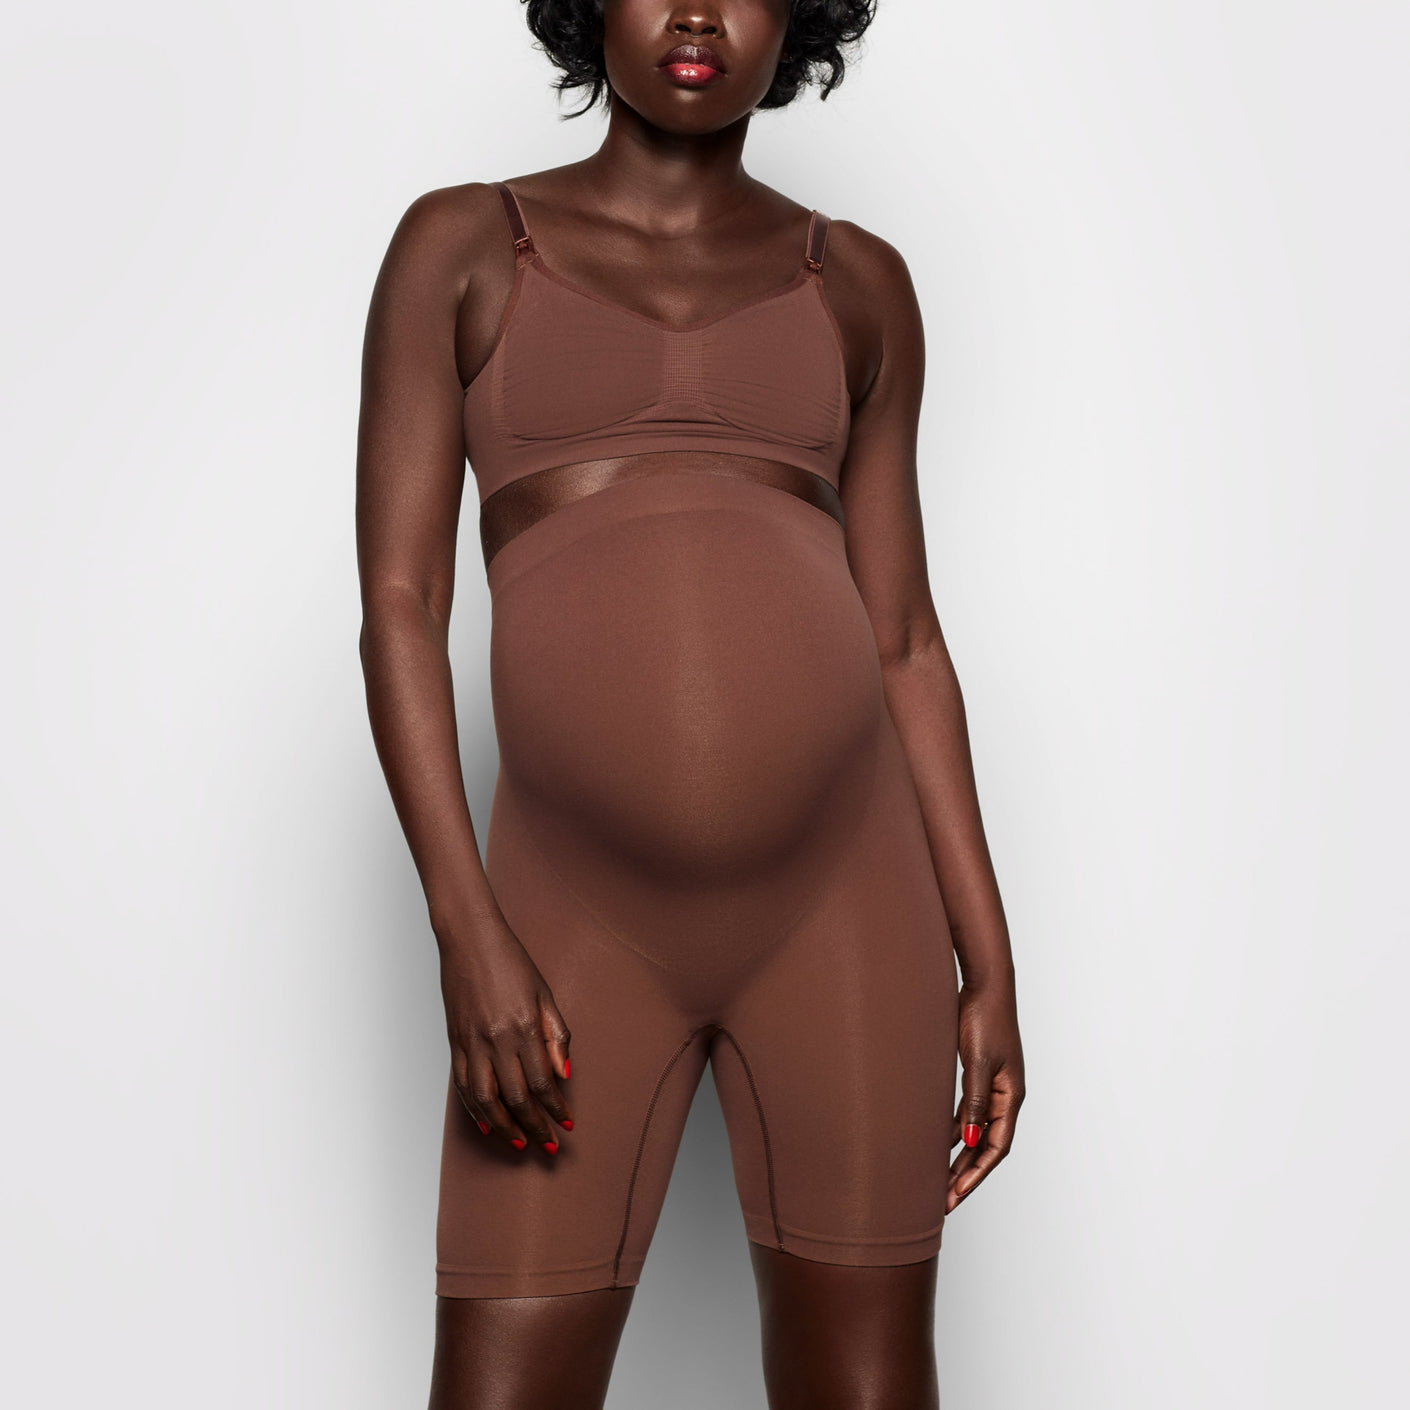 SKIMS Cocoa Sculpting Mid Thigh Bodysuit Size Small/Medium - $57